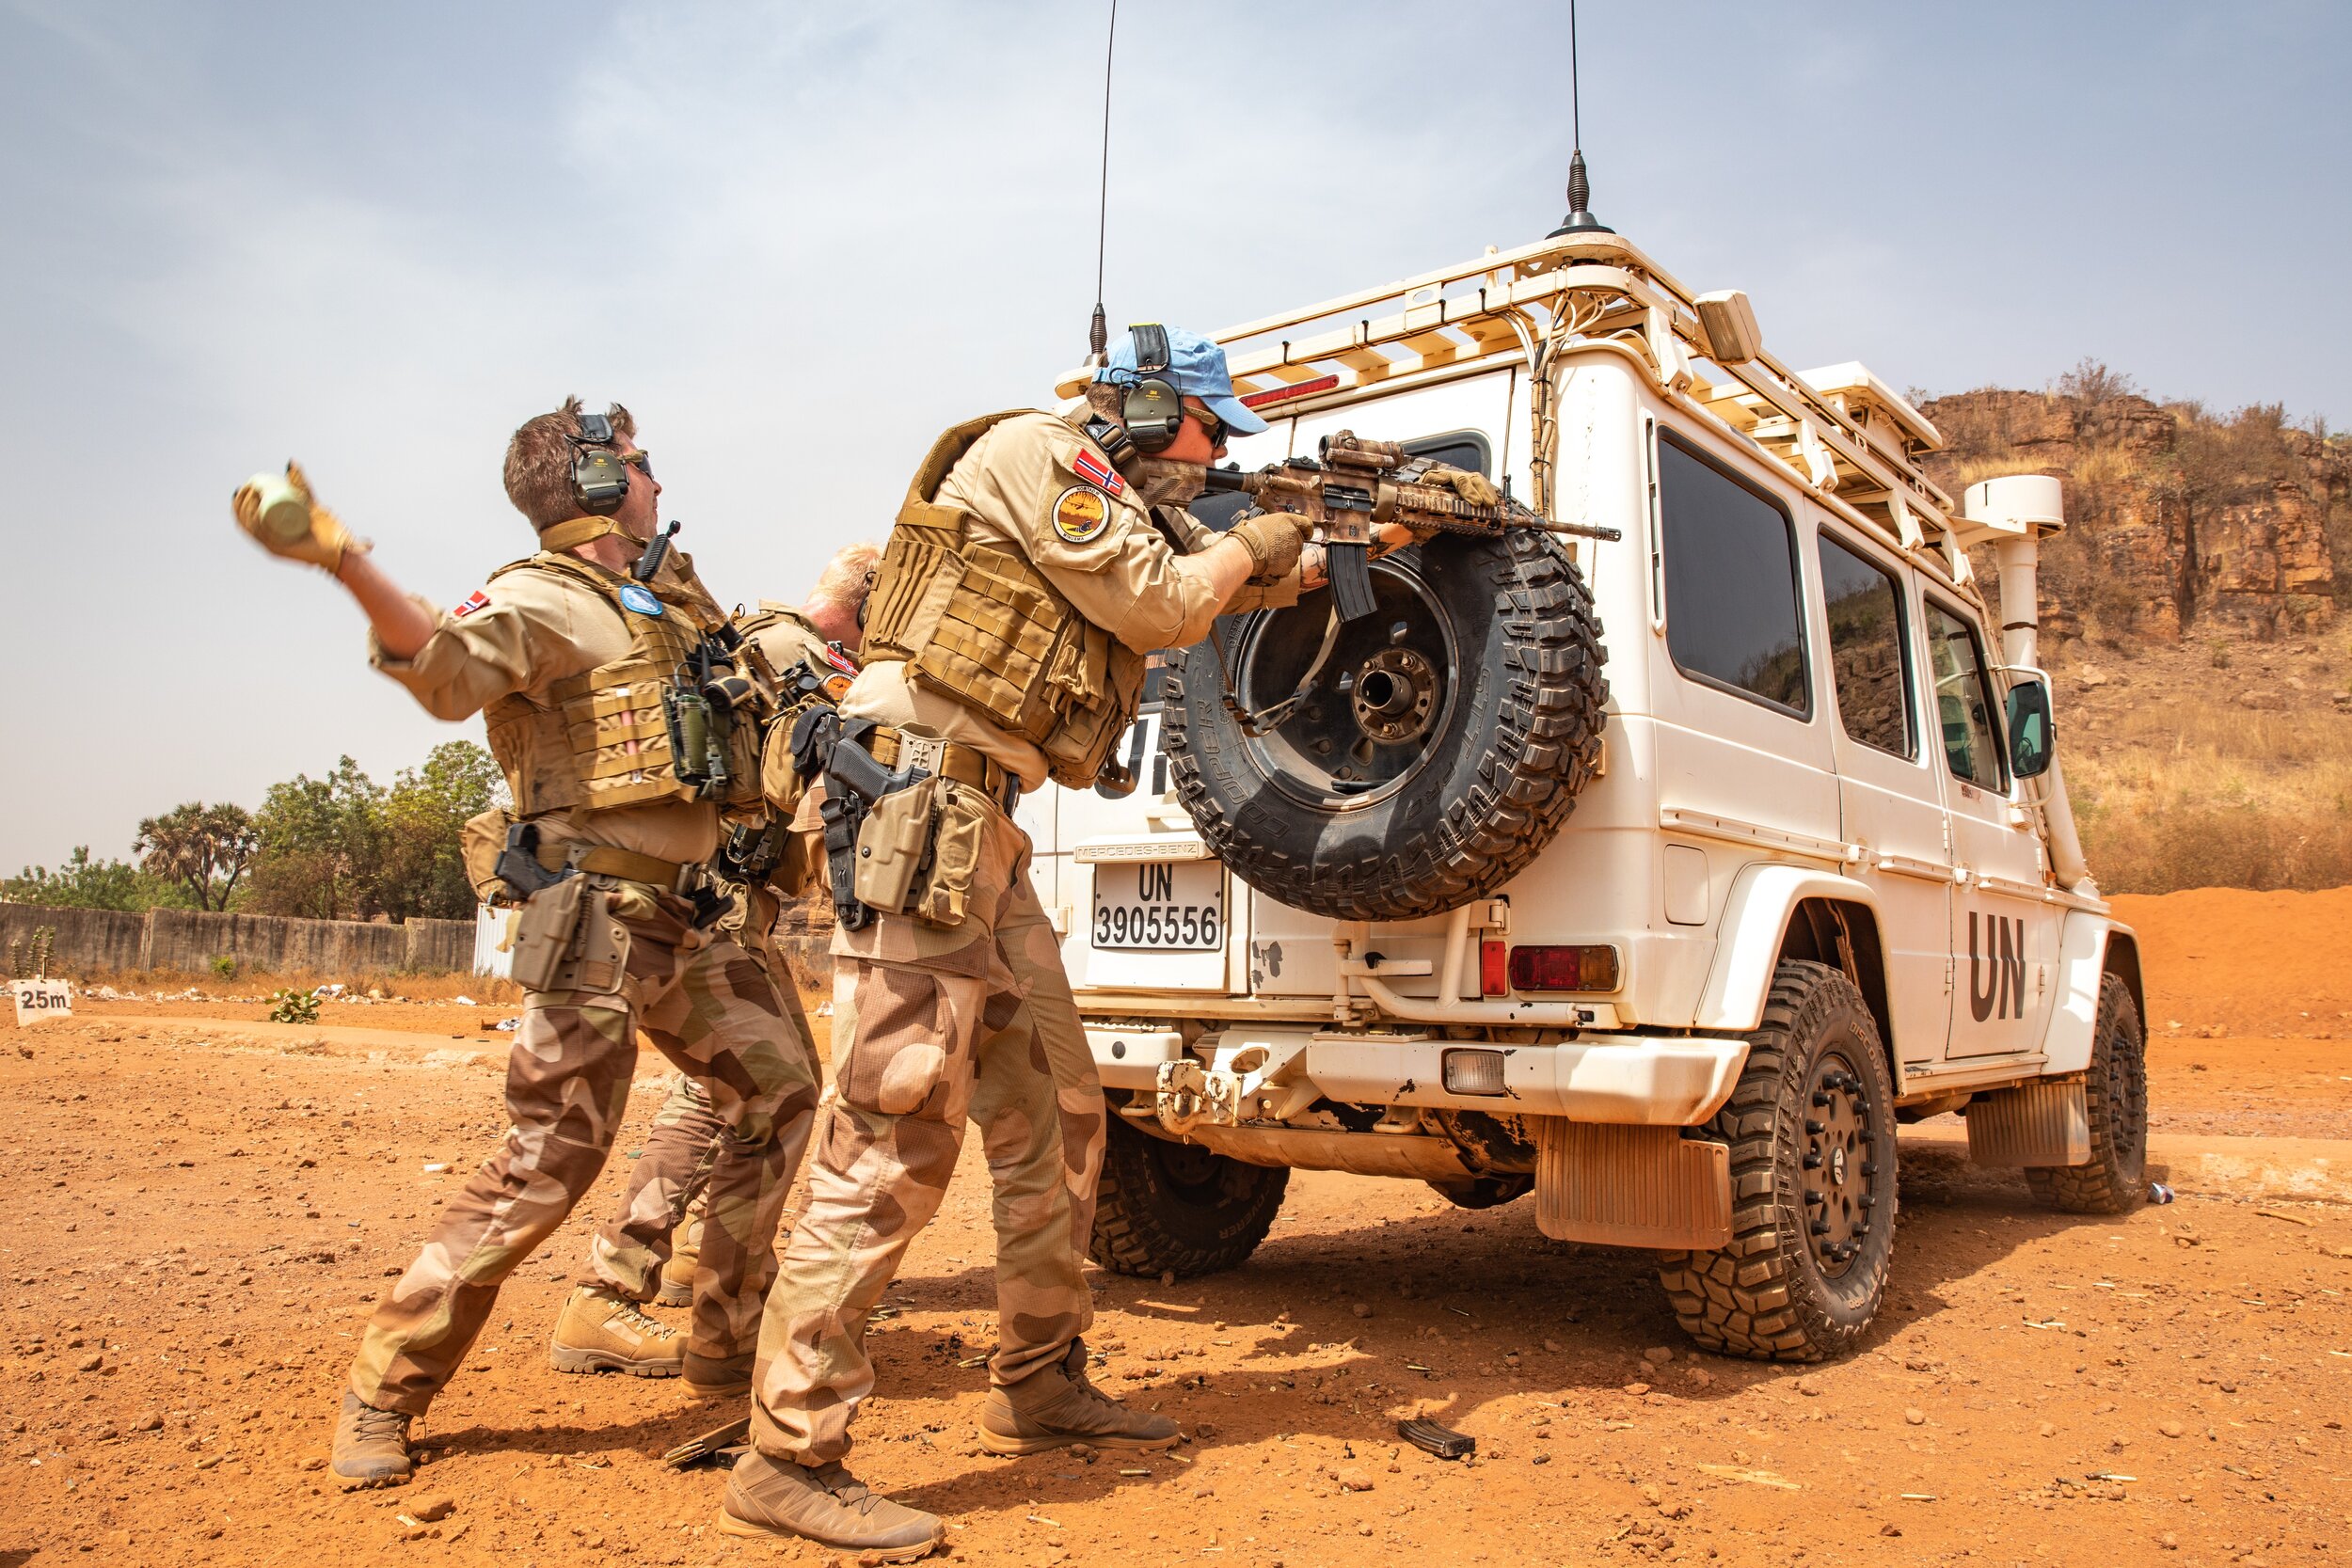  Norwegian troops training in Mali as part of a UN Peacekeeper force 